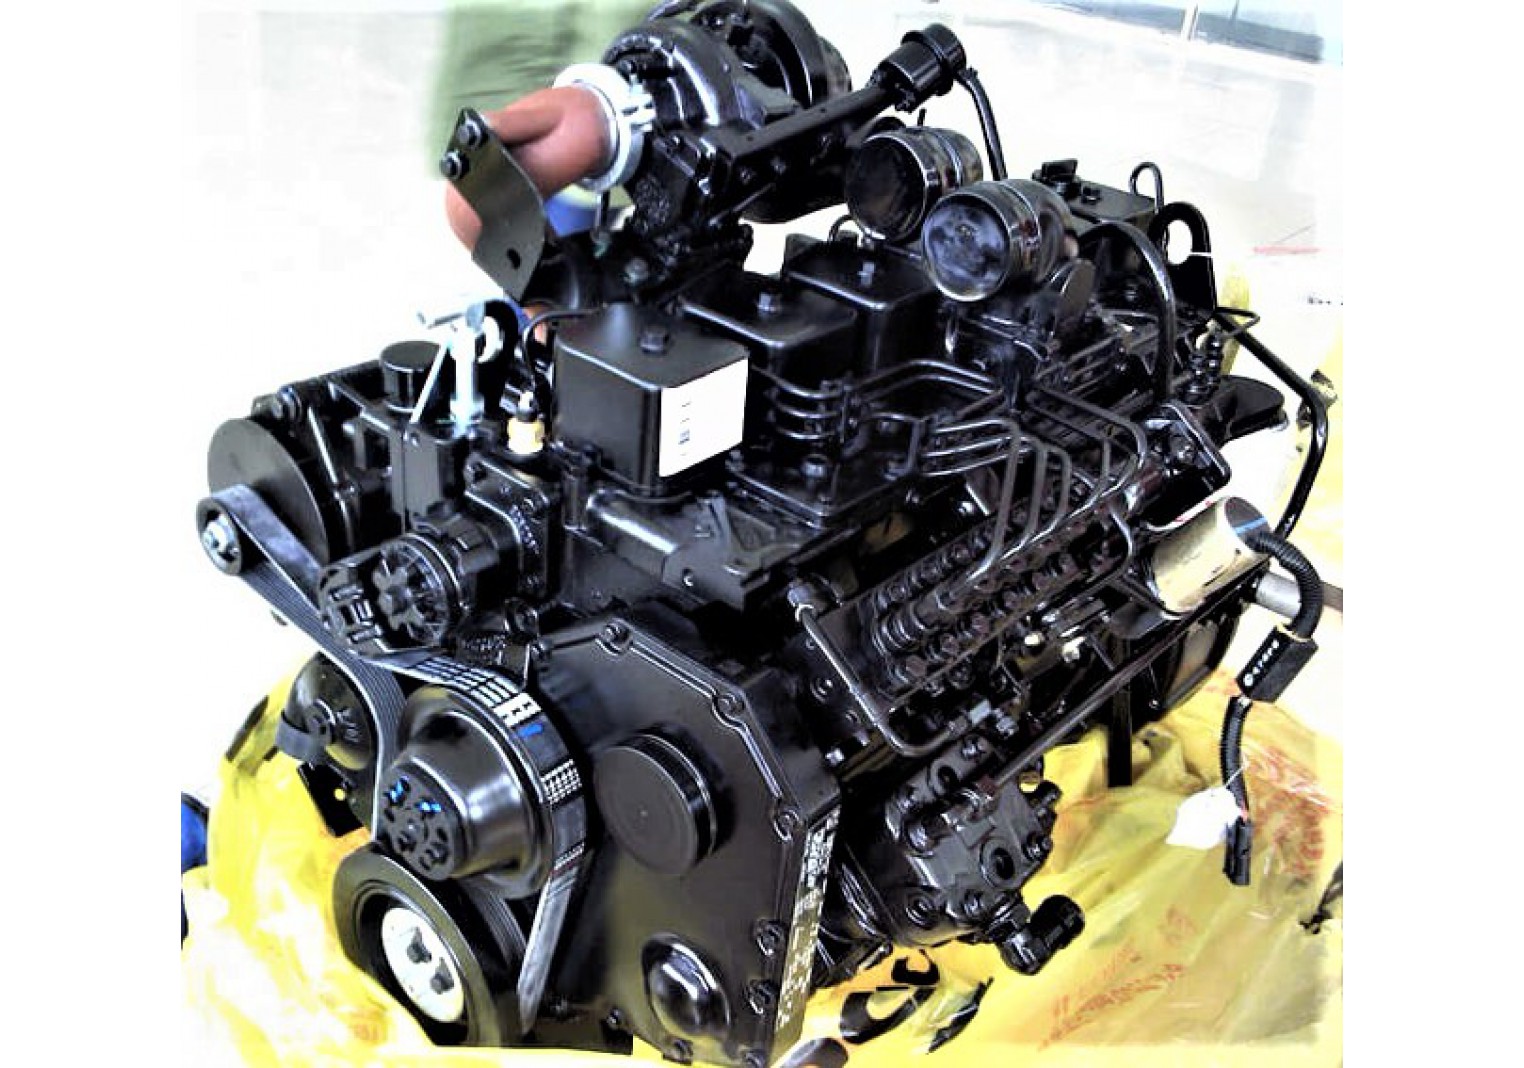 Cummins Diesel Engine EQB235-20